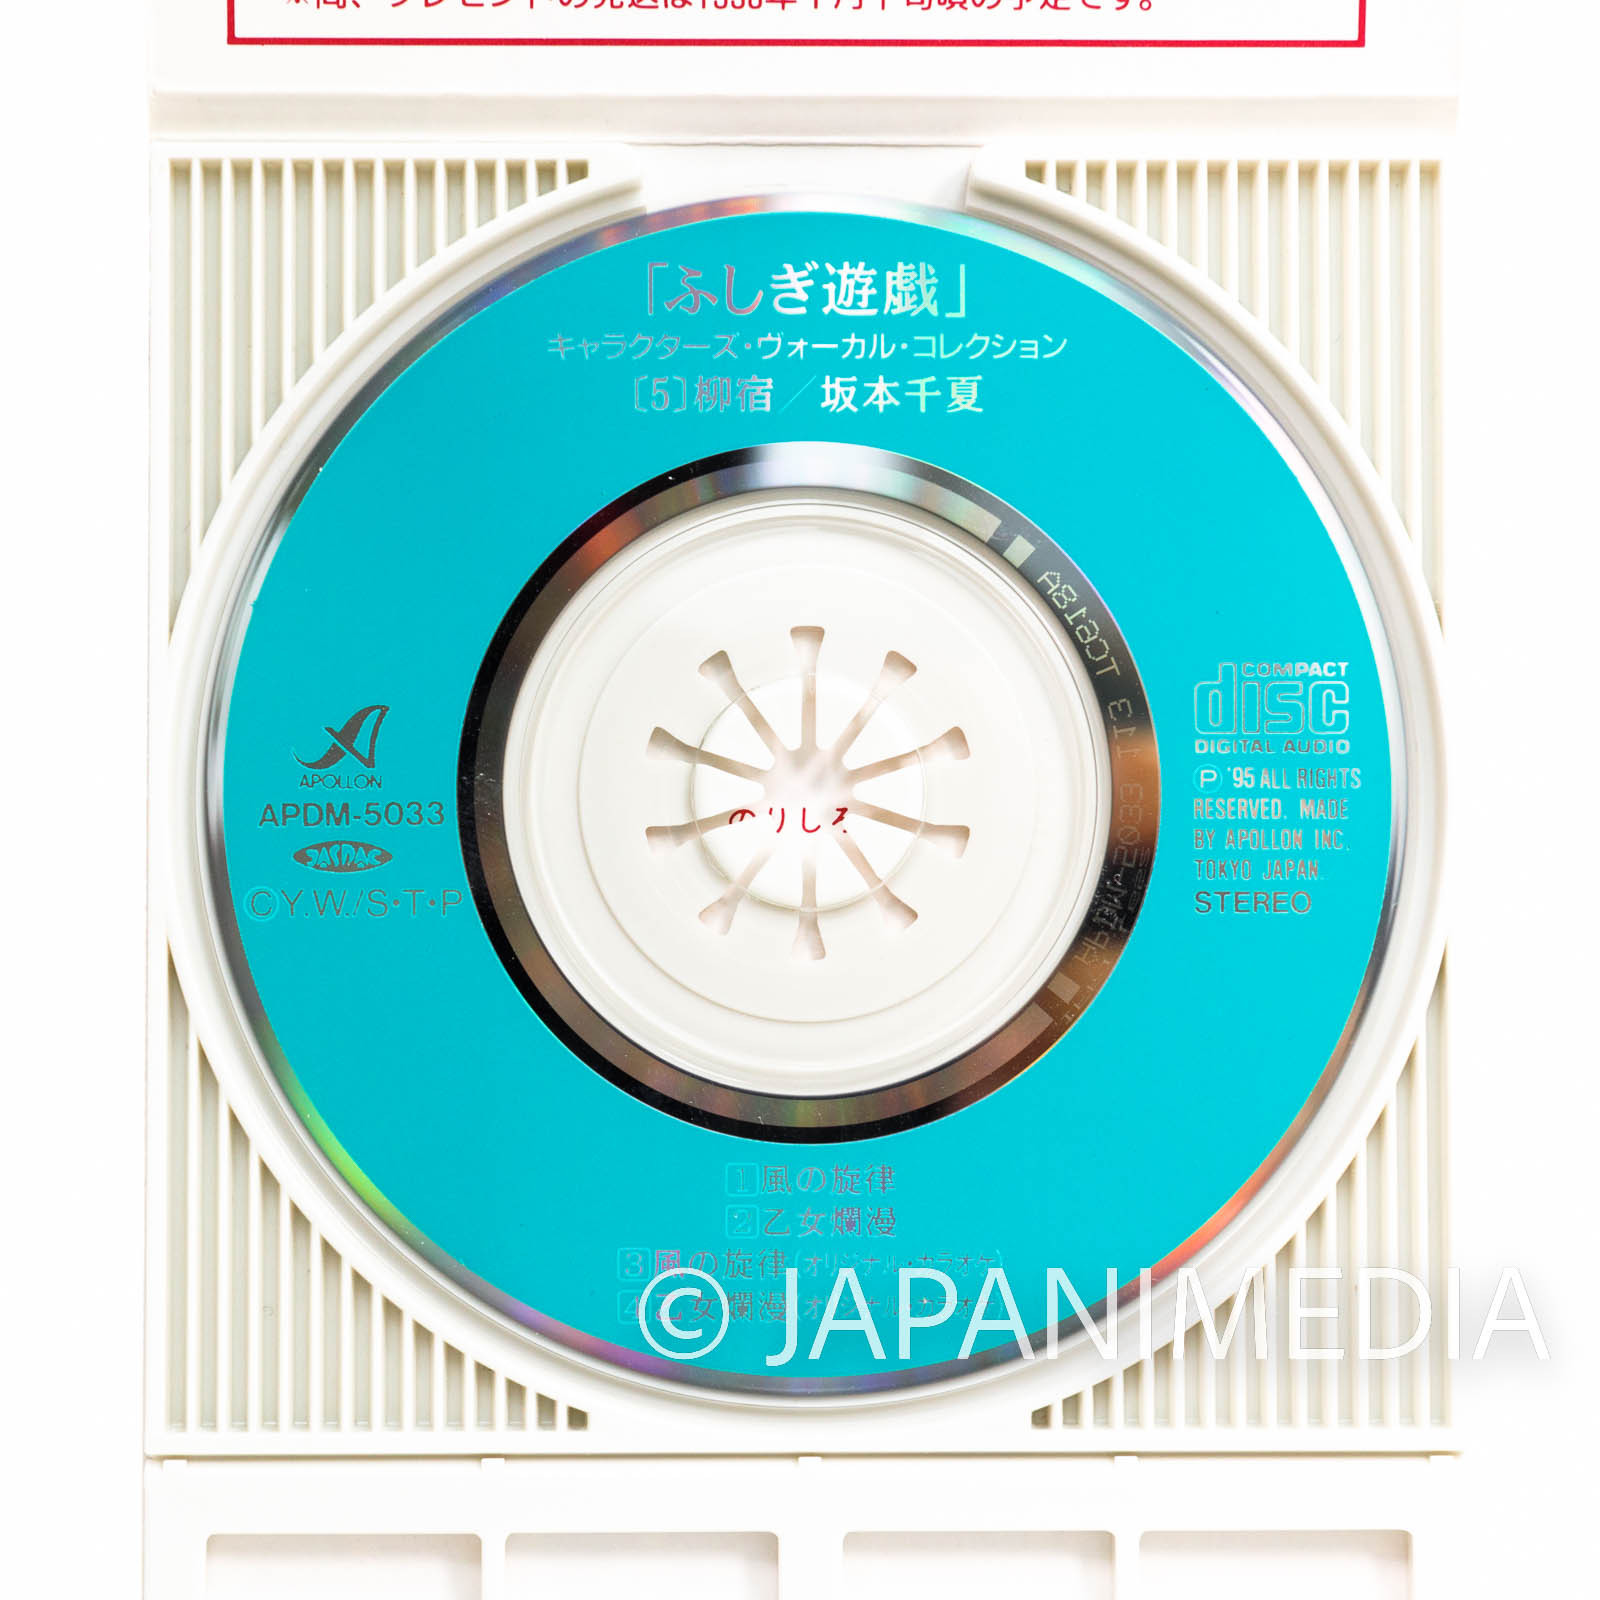 Fushigi Yugi Nuriko Characters vocal collection [5] 3 Inch (8cm) Single CD JAPAN [No Package]